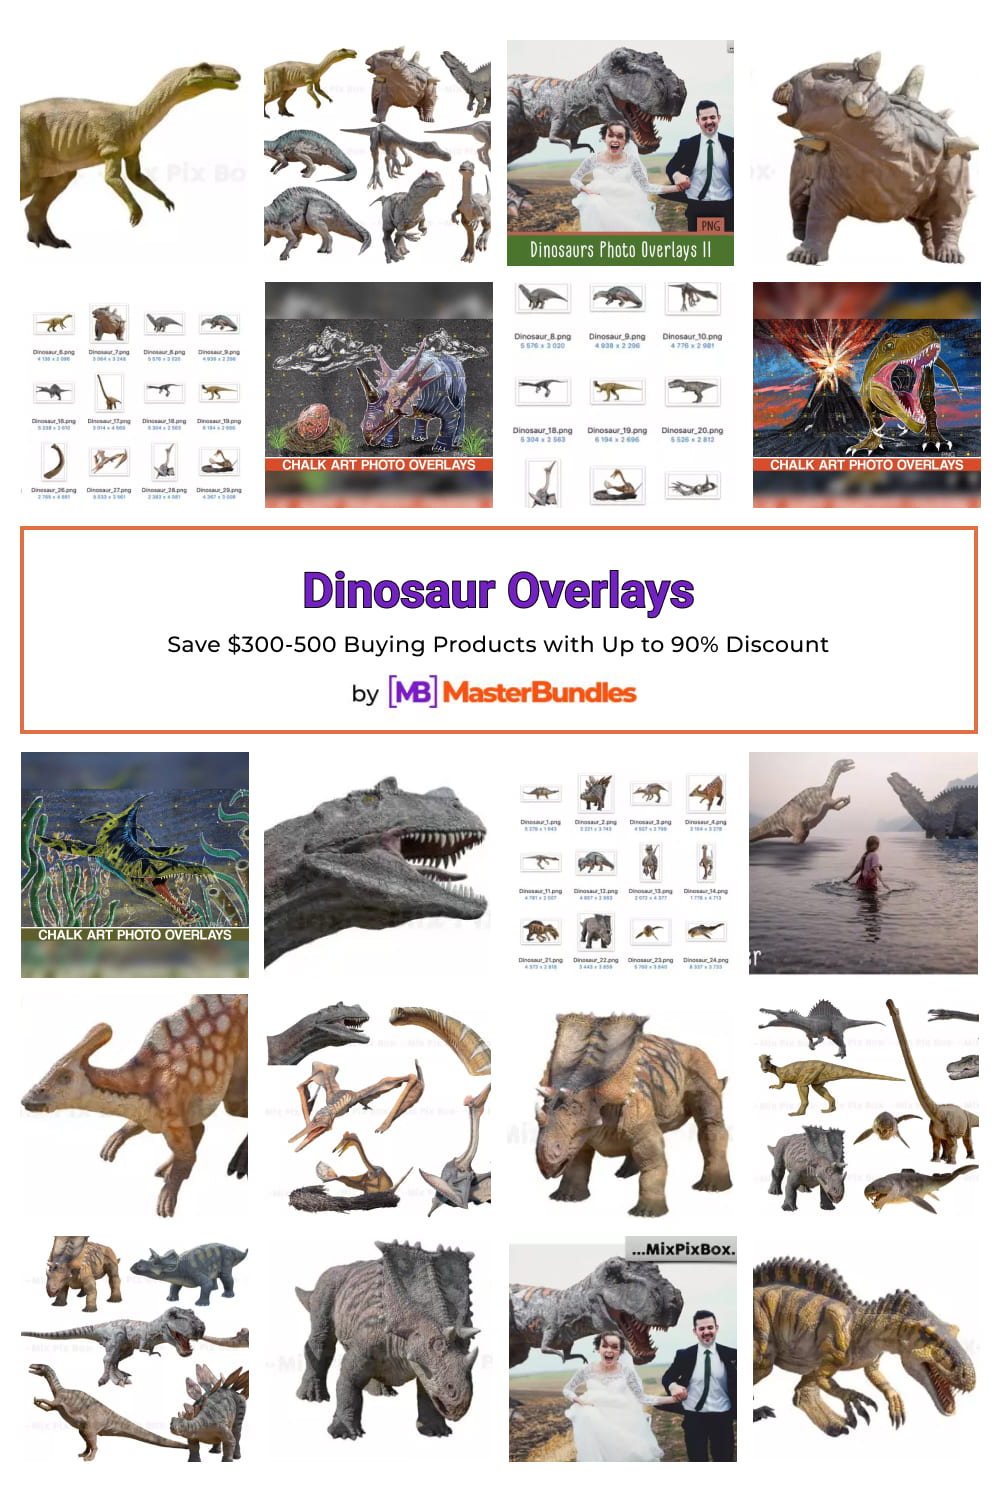 Dinosaur Overlays Pinterest image.